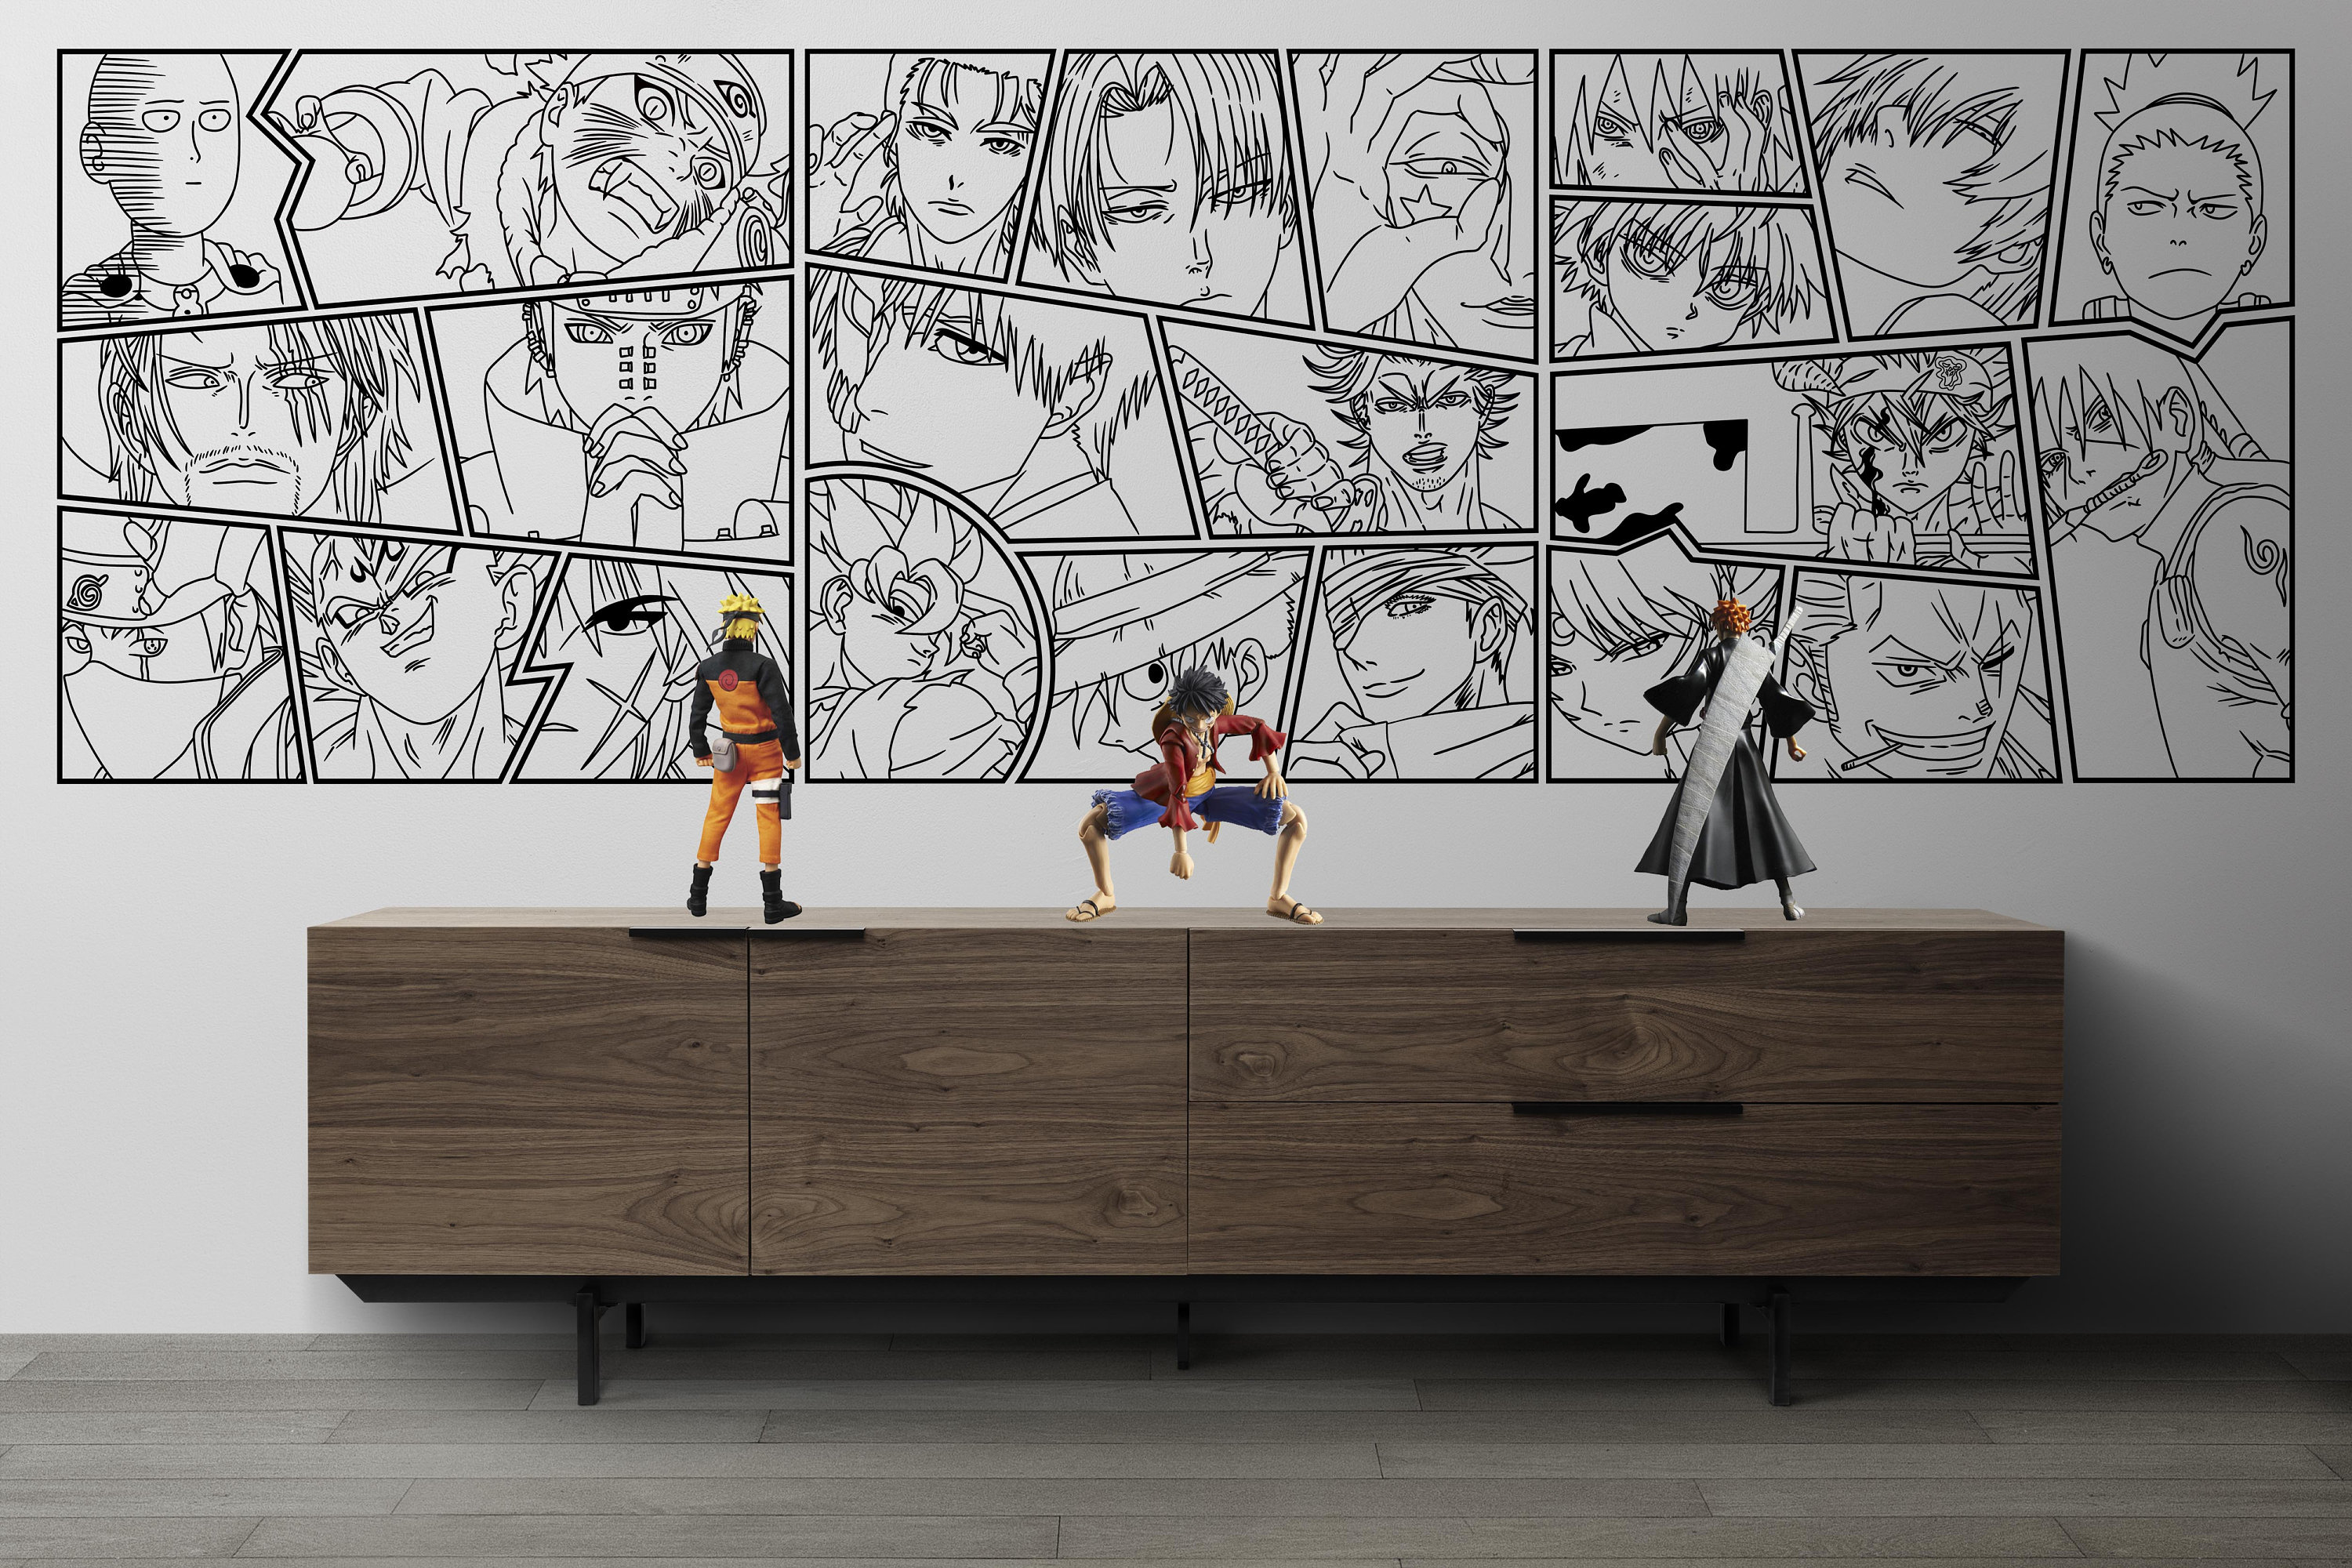 3D Attack On Titan 3302 Anime Wallpaper Mural Print Wall Wallpaper Murals  US Hon  eBay